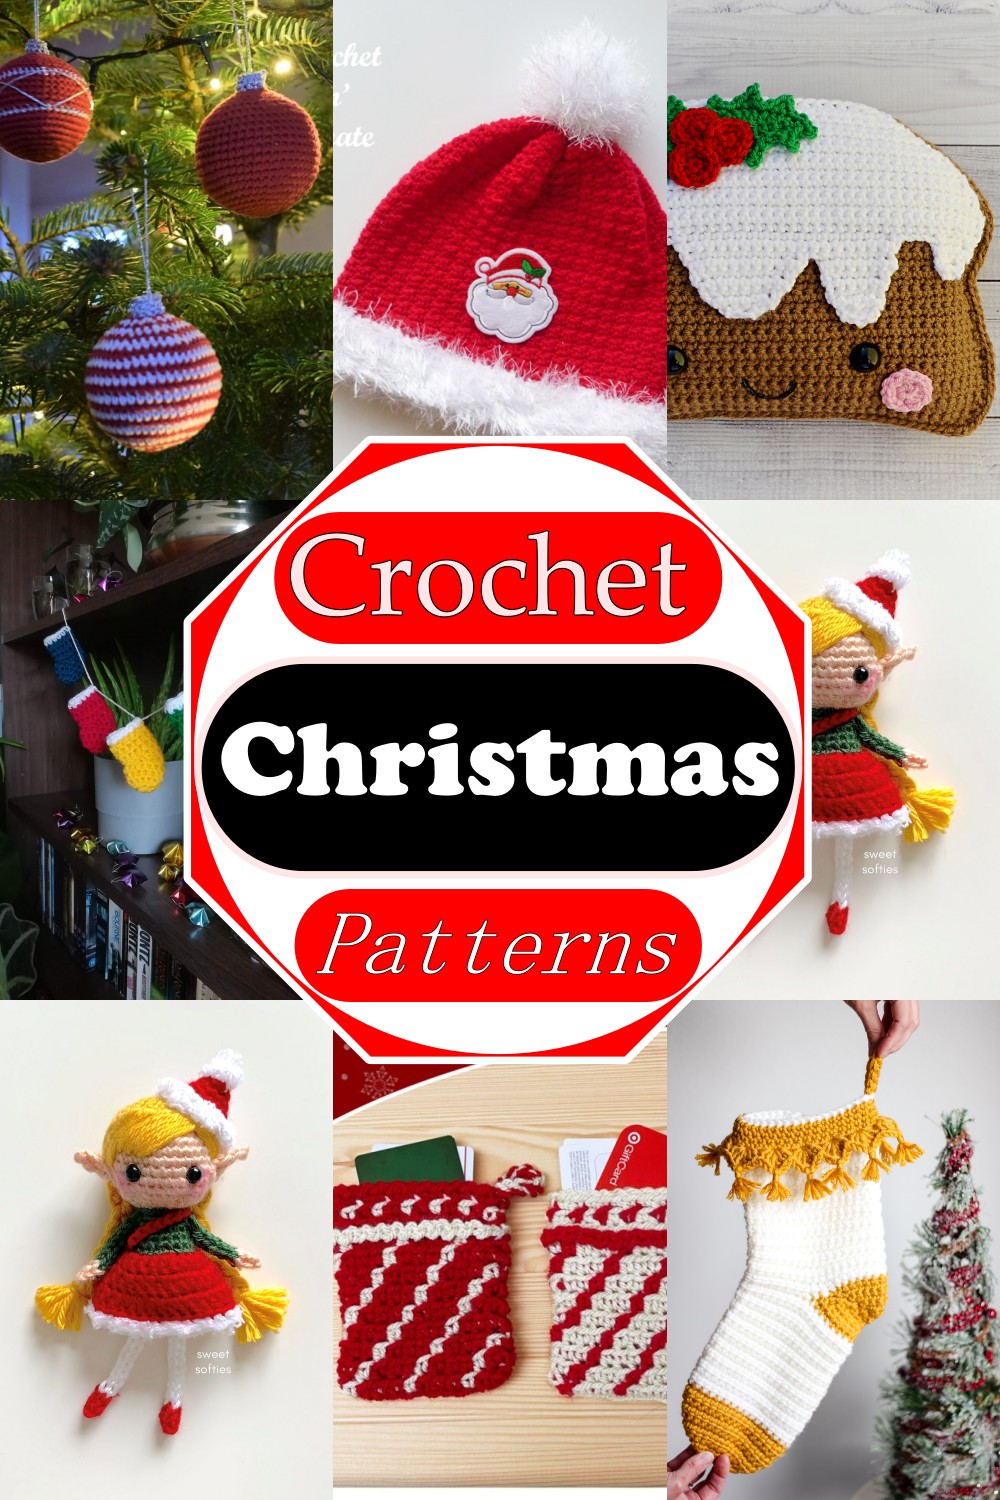 Free Crochet Christmas Patterns